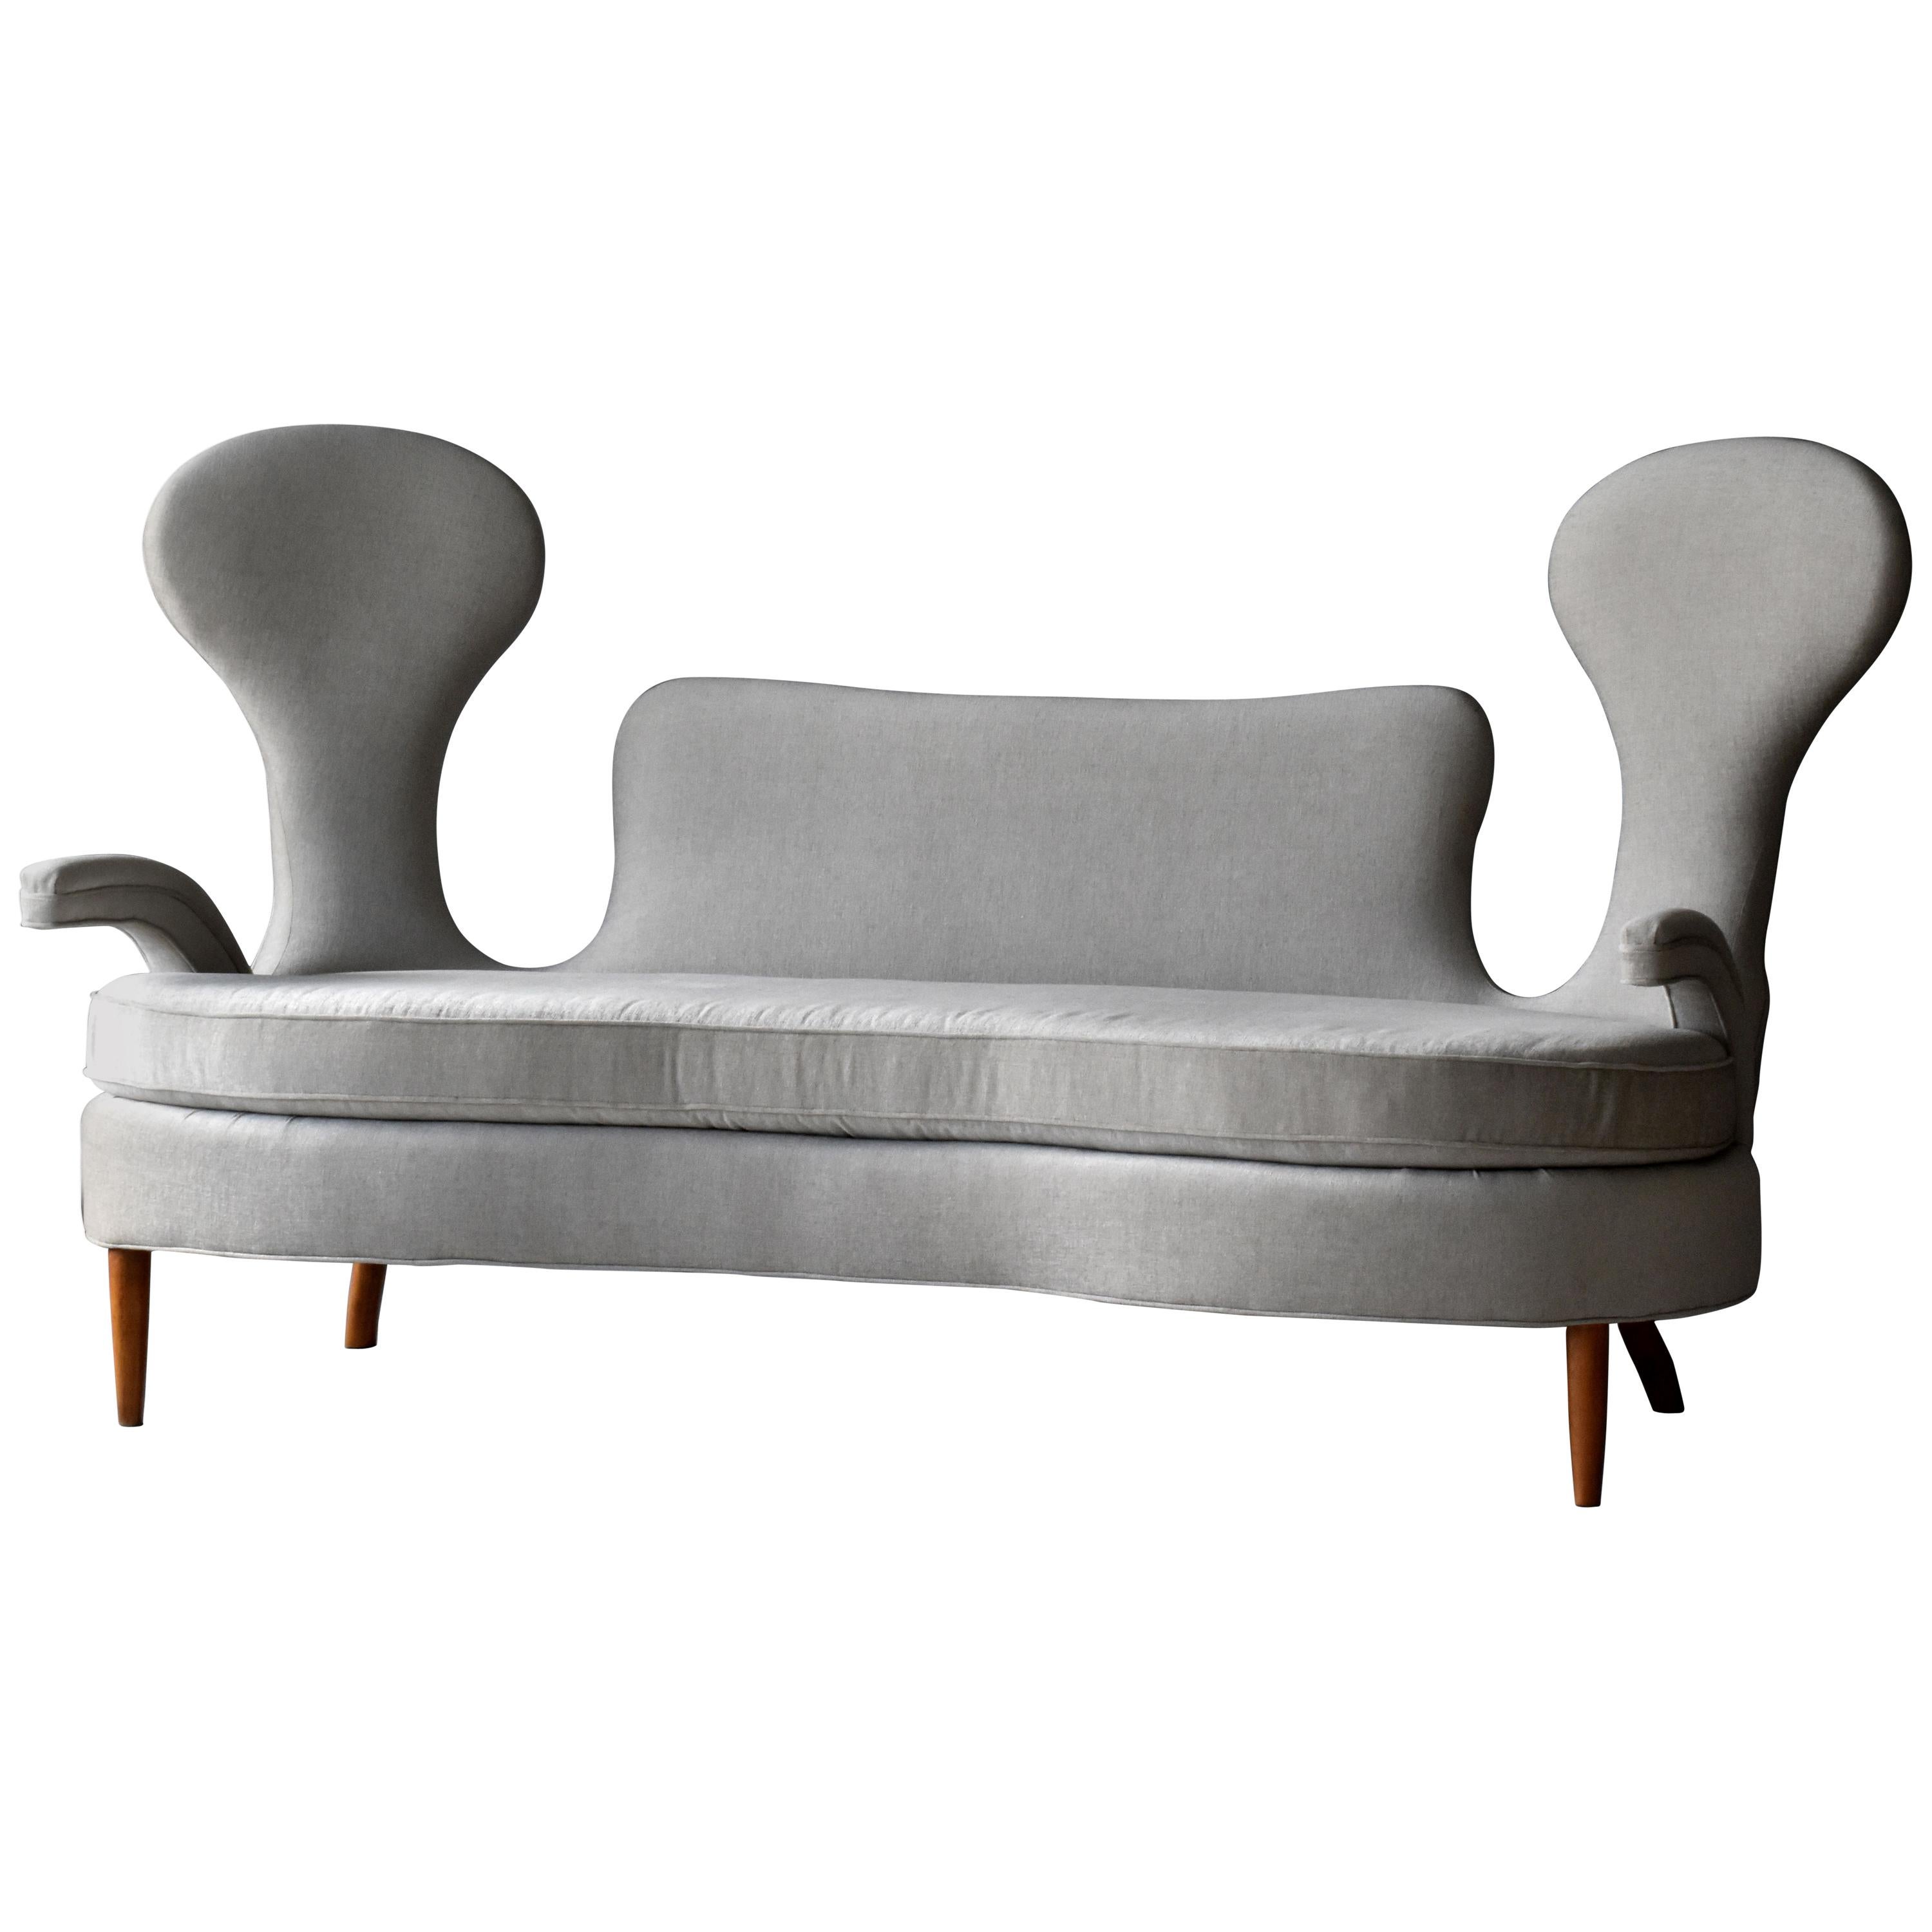 Renzo Zavanella, Important Sofa from Hotel San Remo, Light Fabric, Walnut, 1950